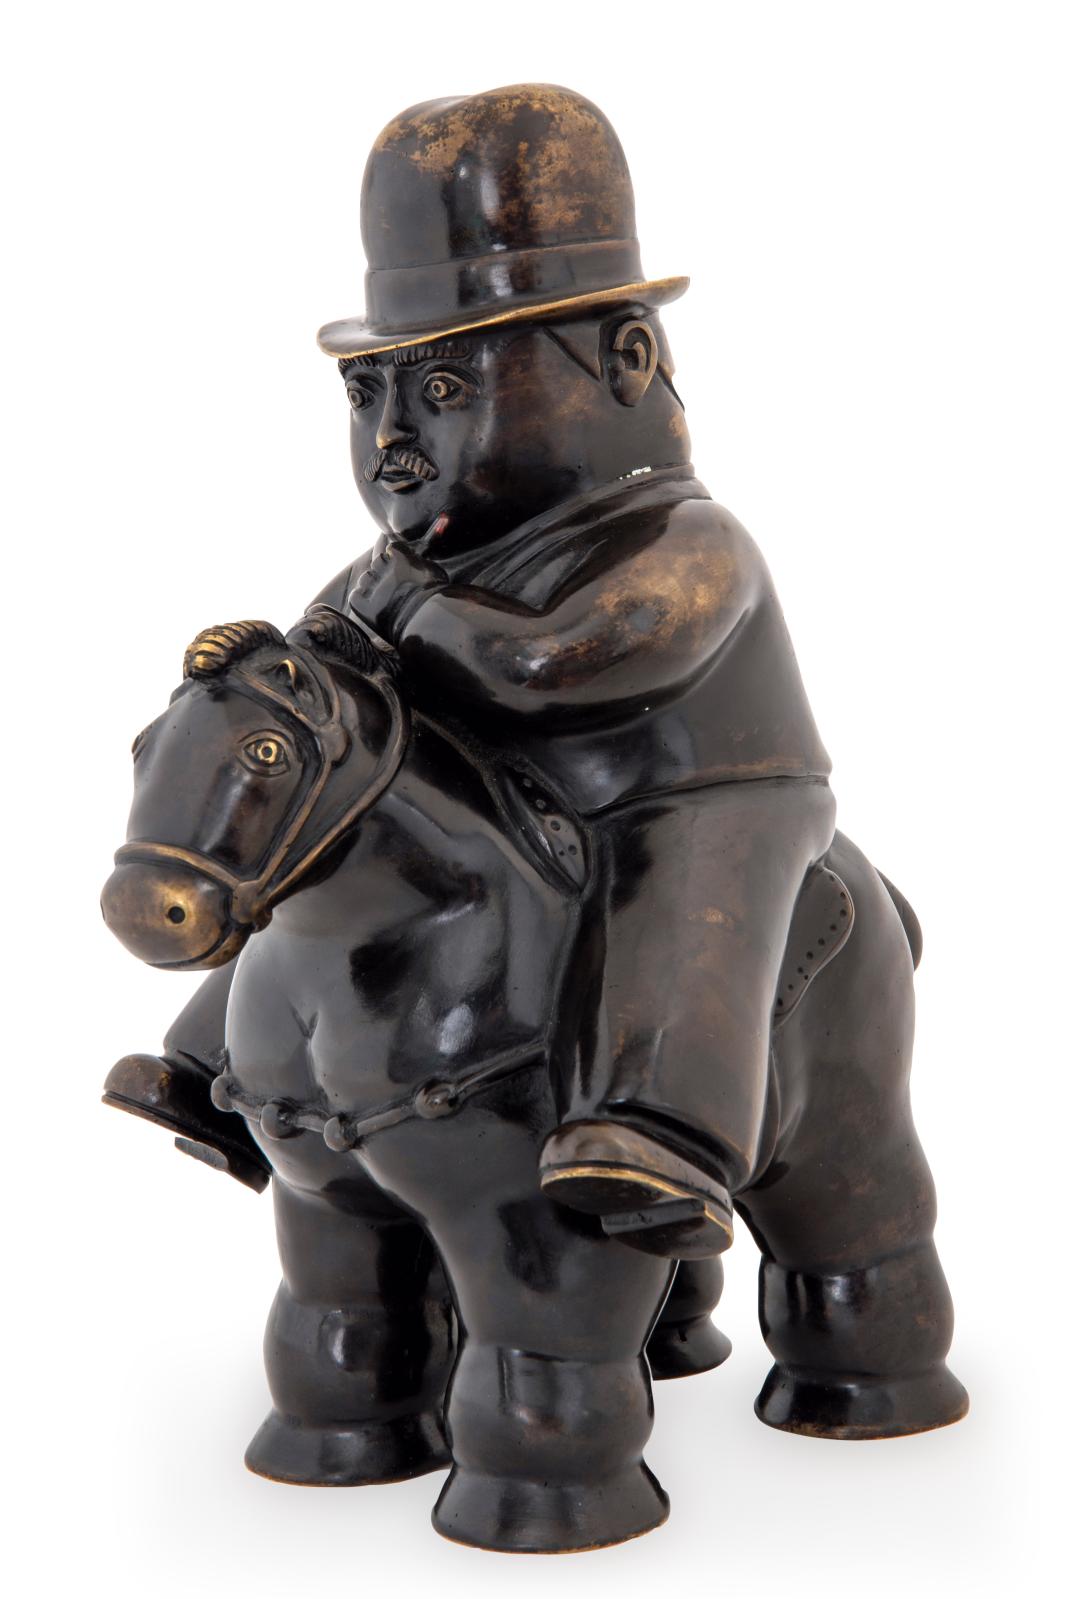 Le bronze équestre selon Botero